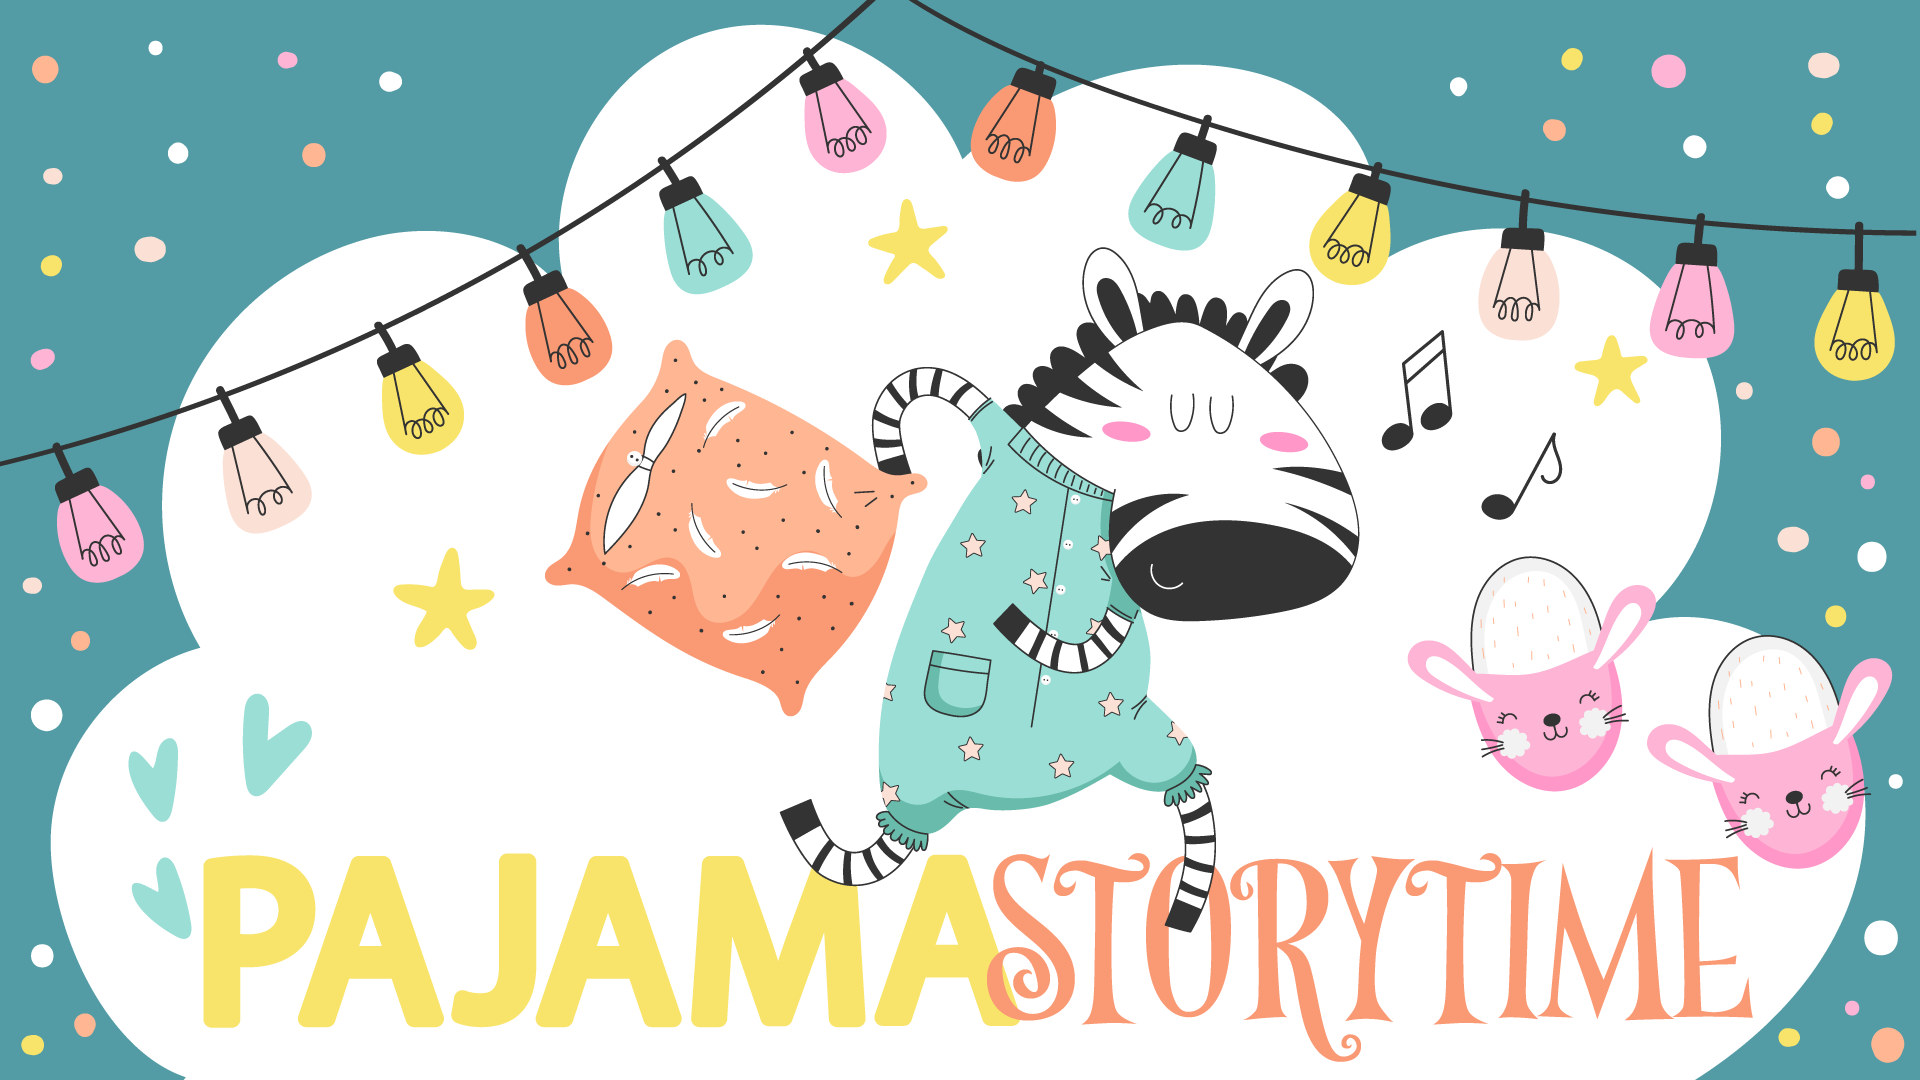 event banner: pajama storytime